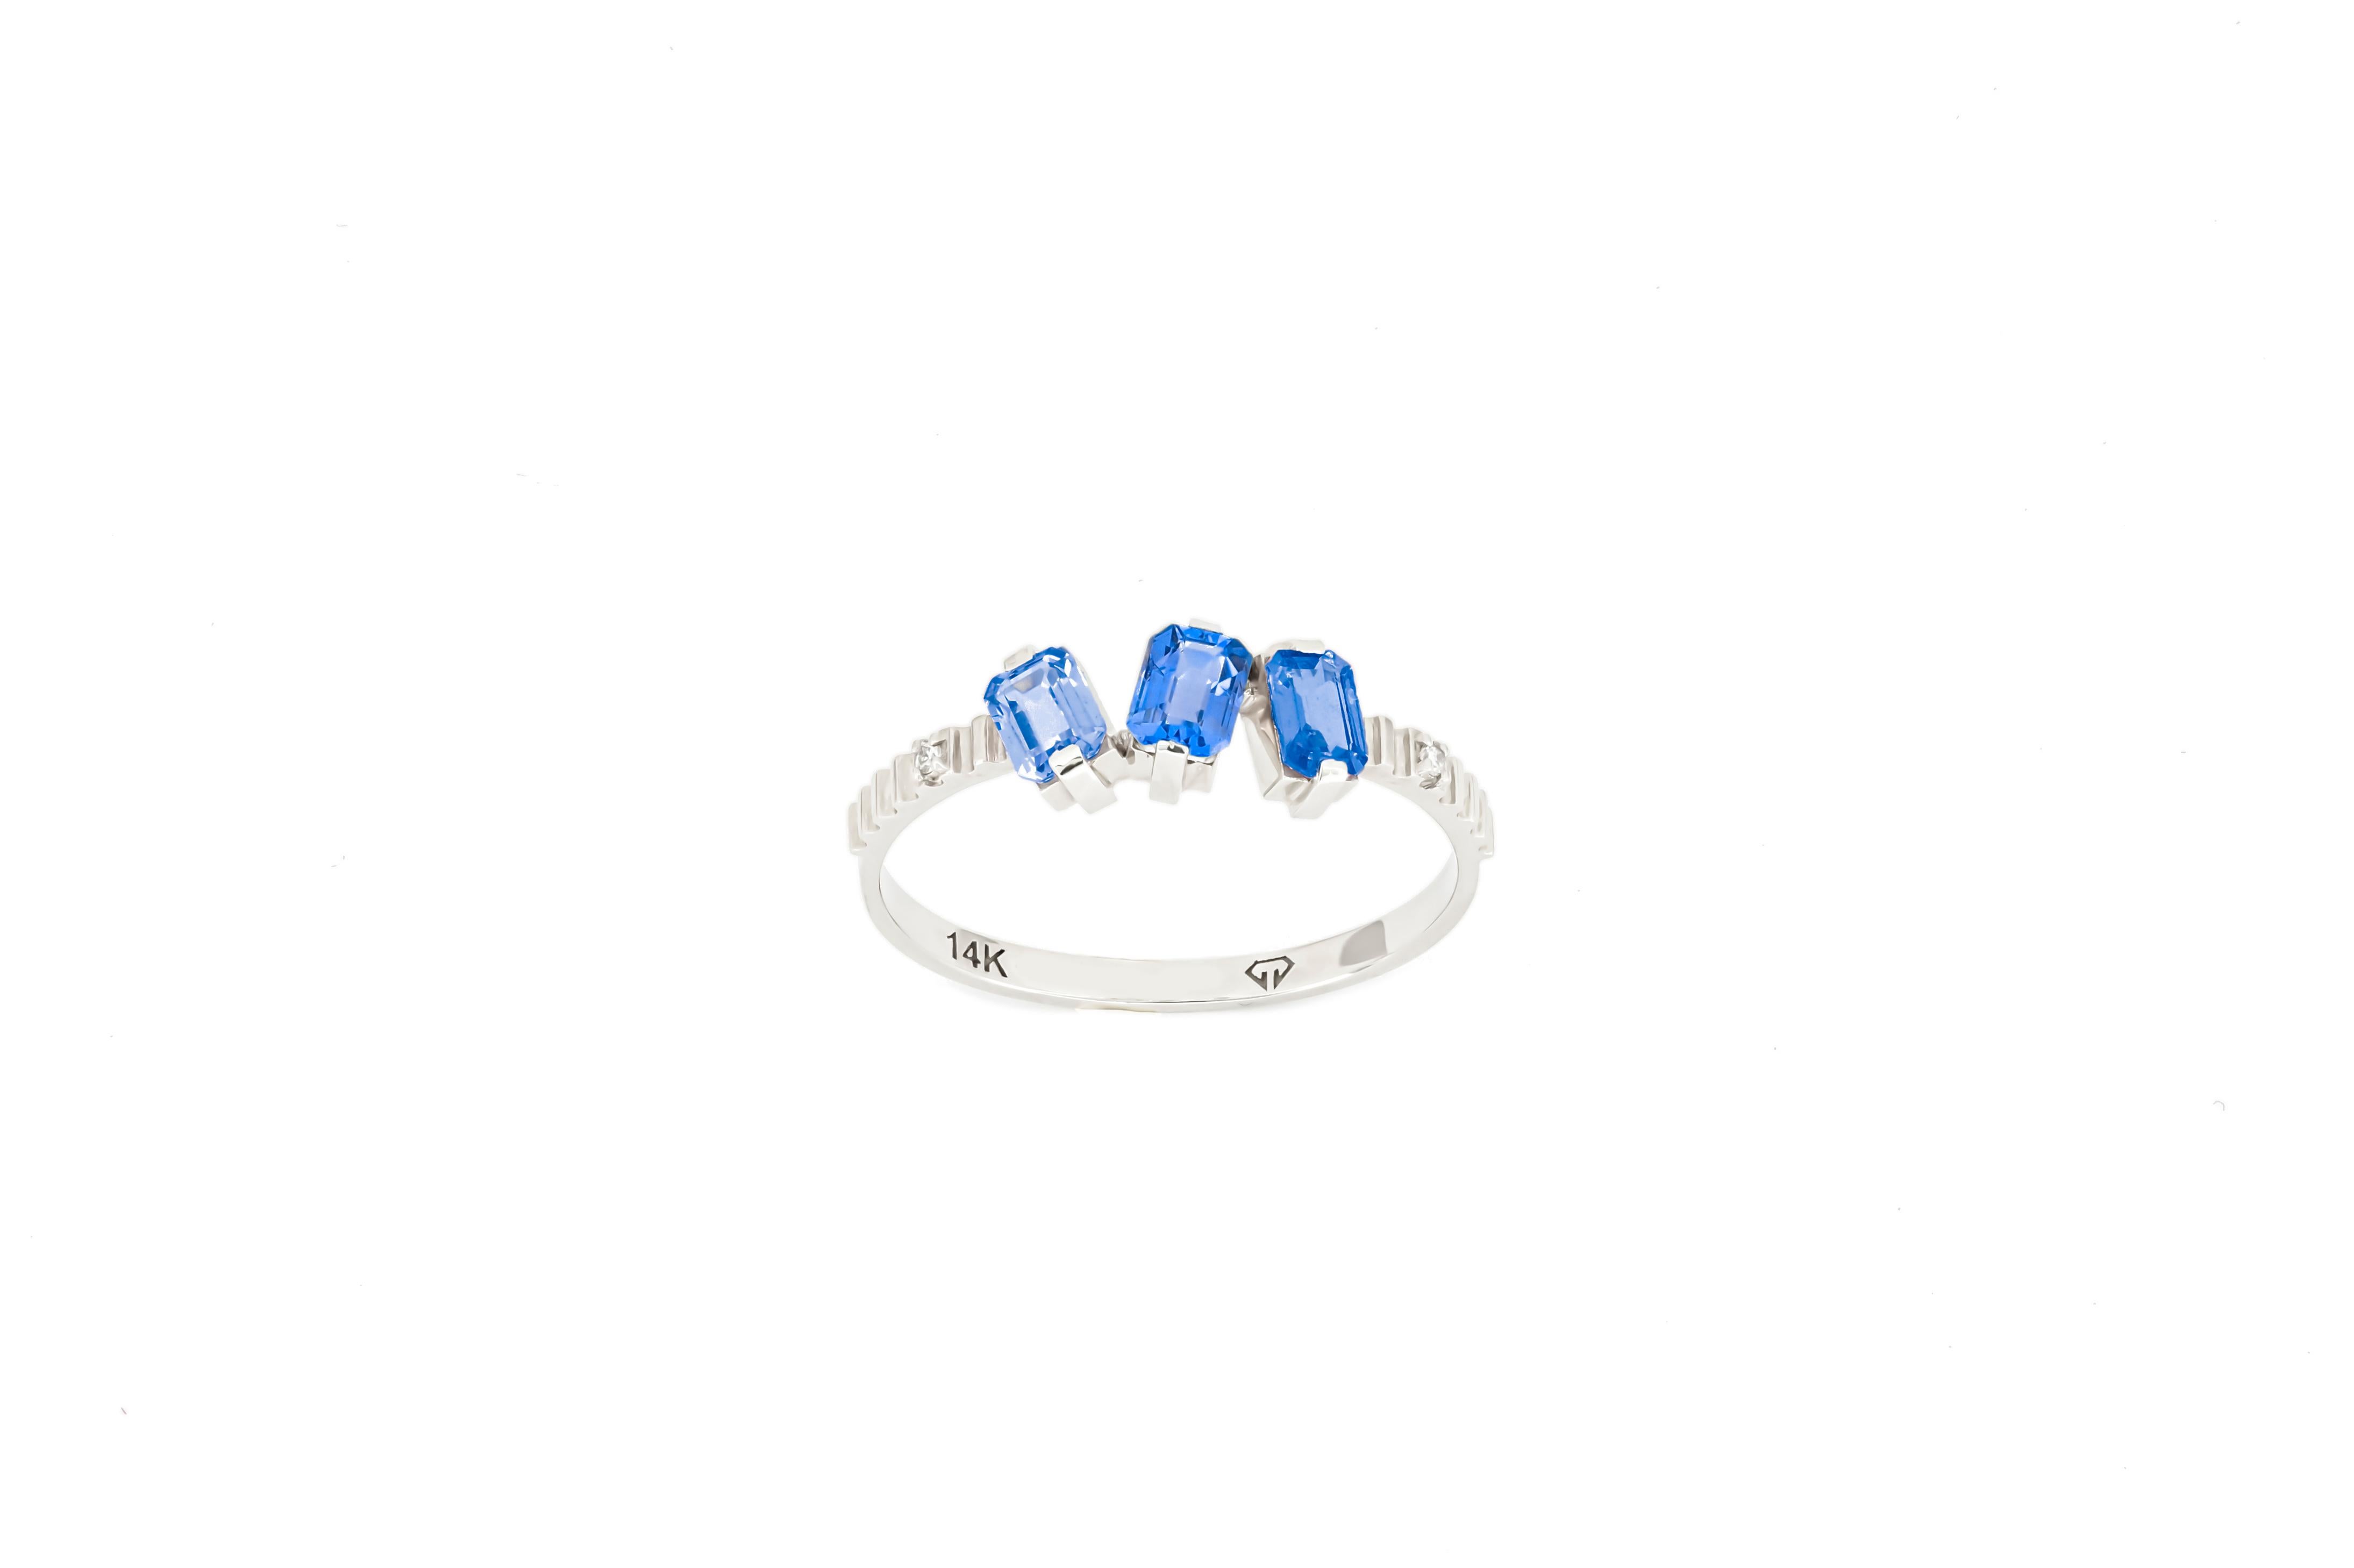 For Sale:  Monochrome blue gemstone 14k ring.  5